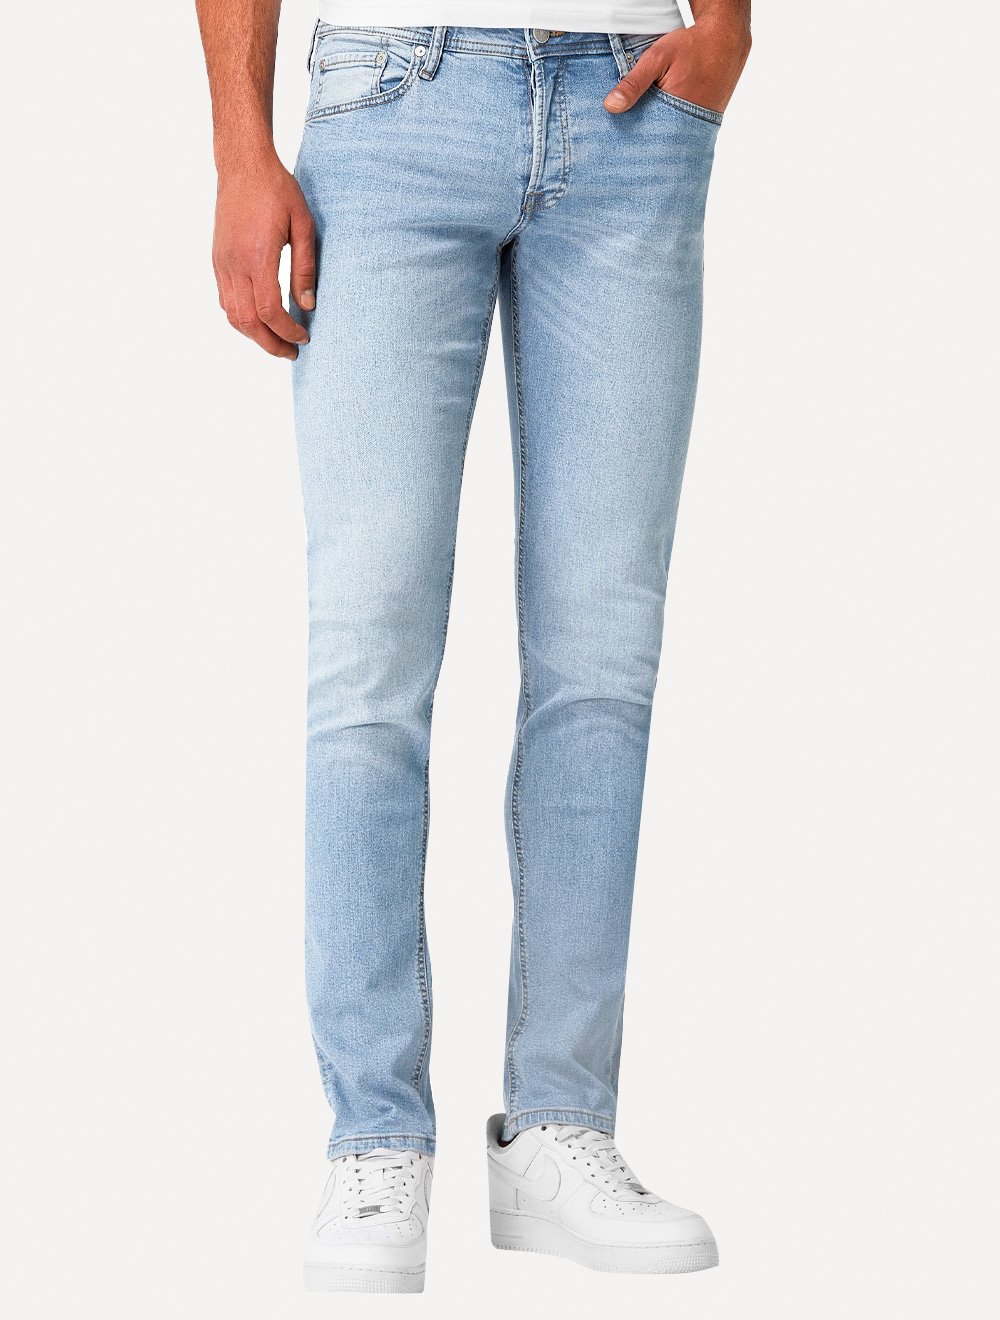 Calça Levis Jeans Masculina 510 Skinny Stretch Azul